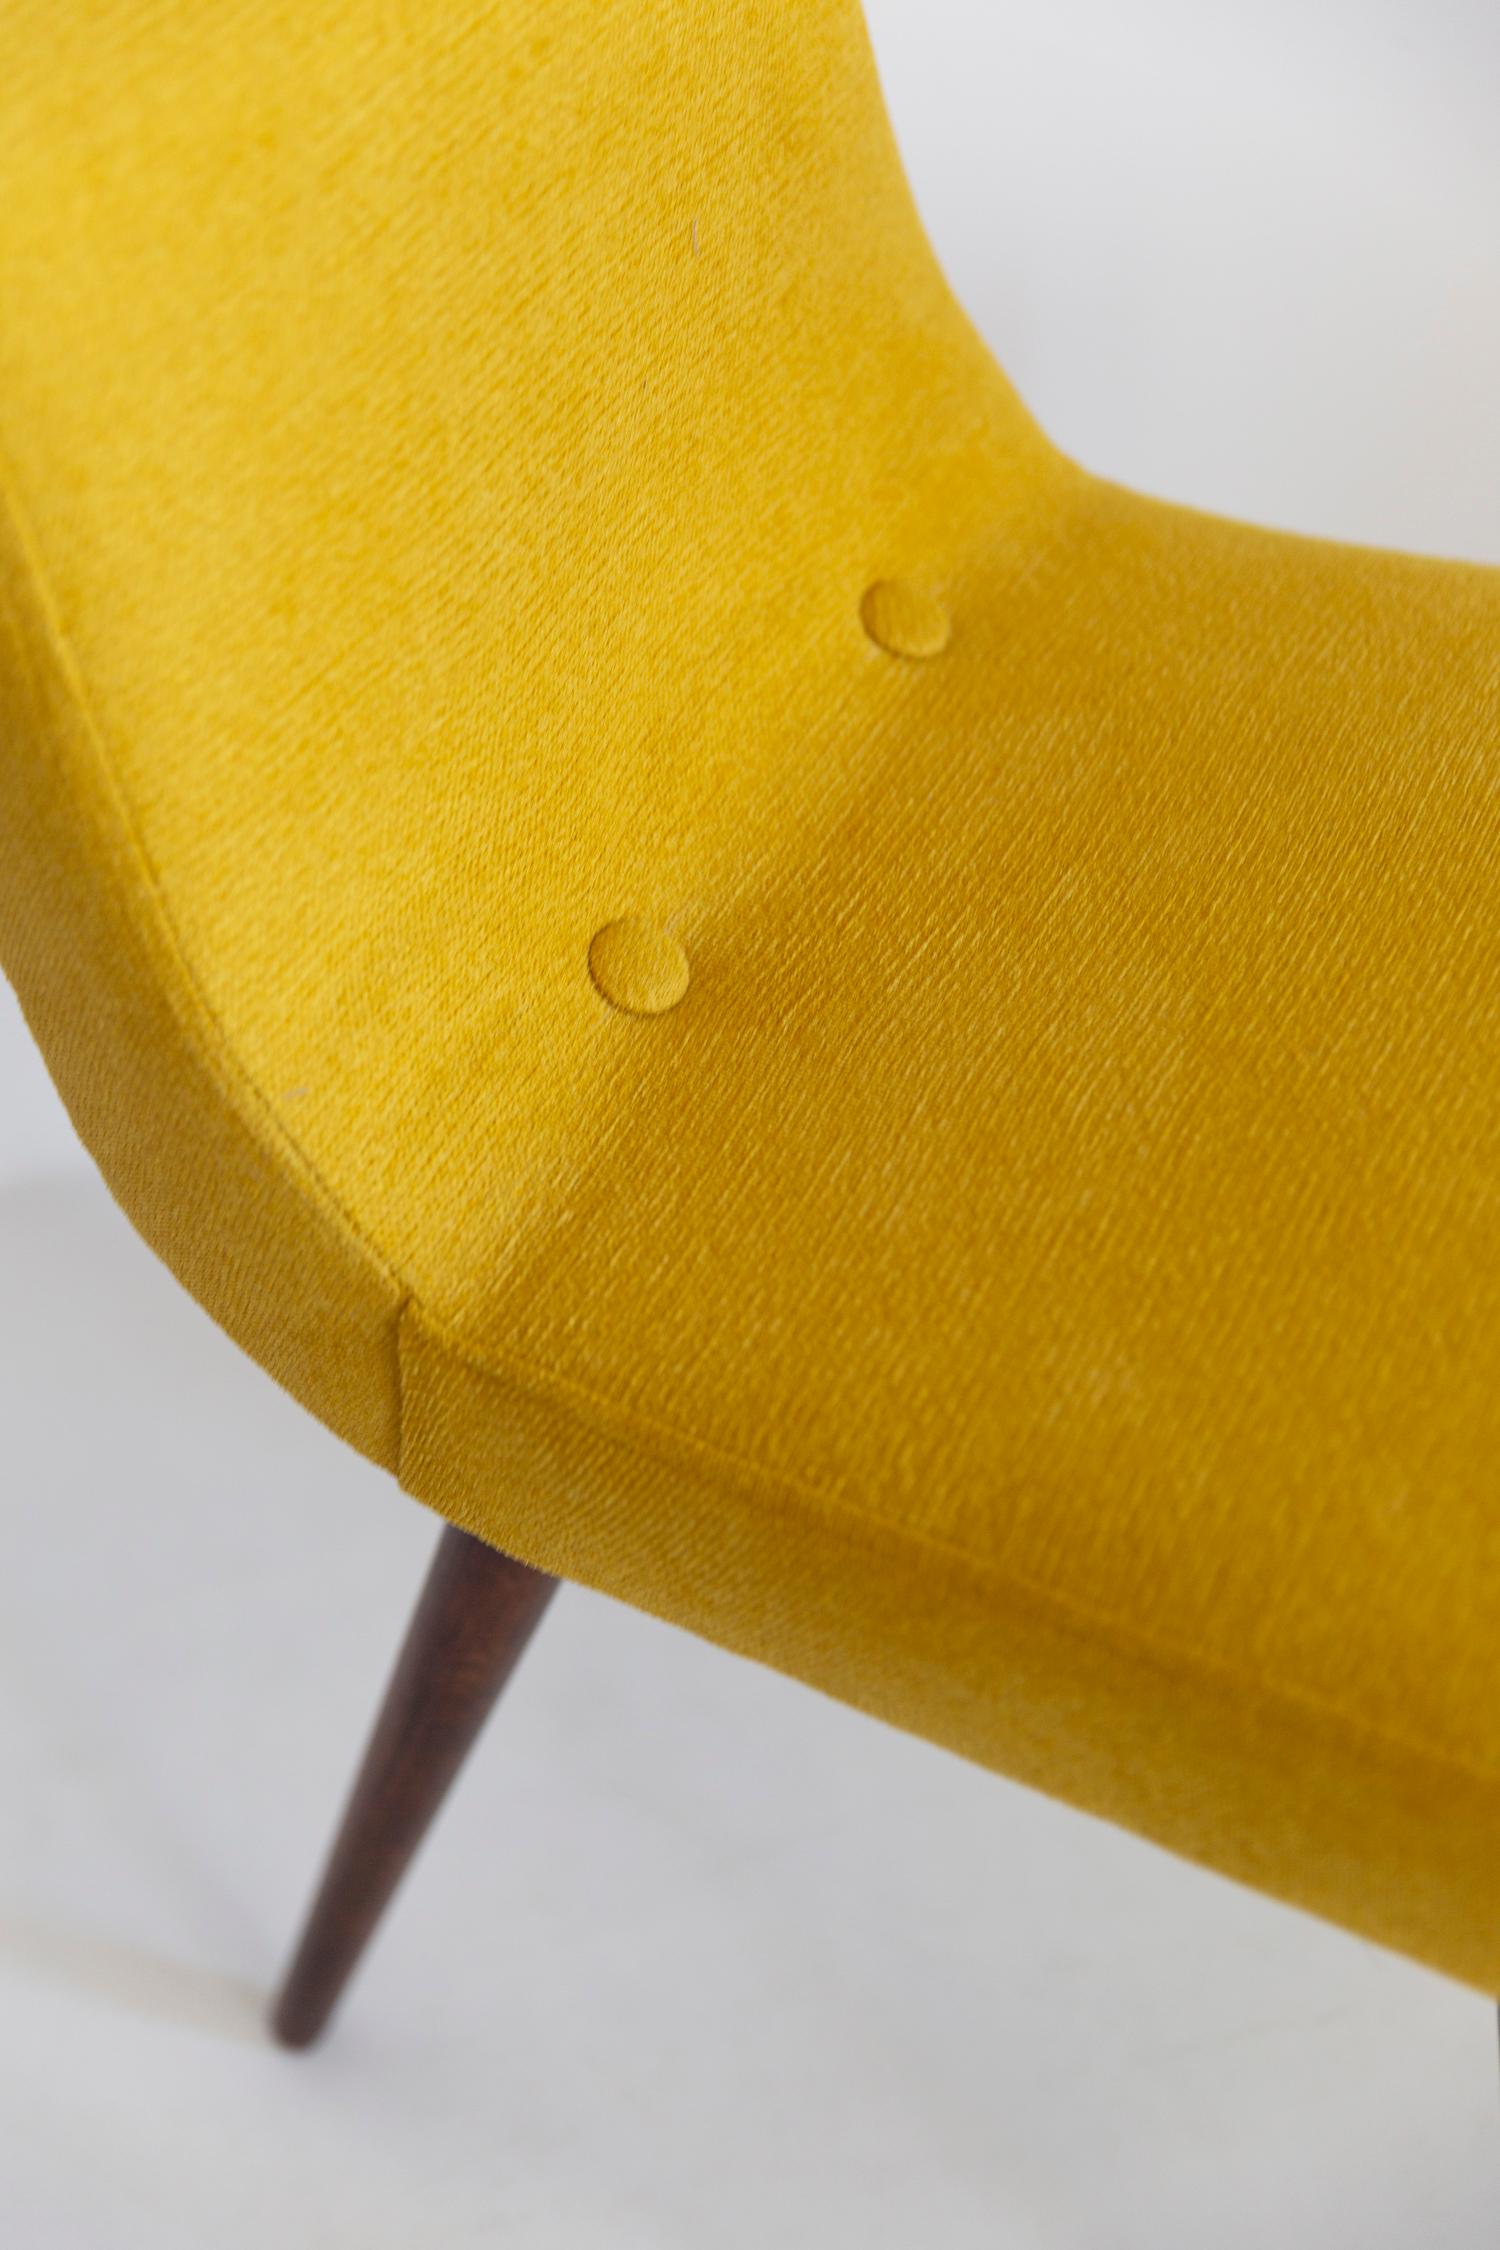 Textile Midcentury Mustard Yellow Wool Chair, Rajmund Halas, Europe, 1960s For Sale